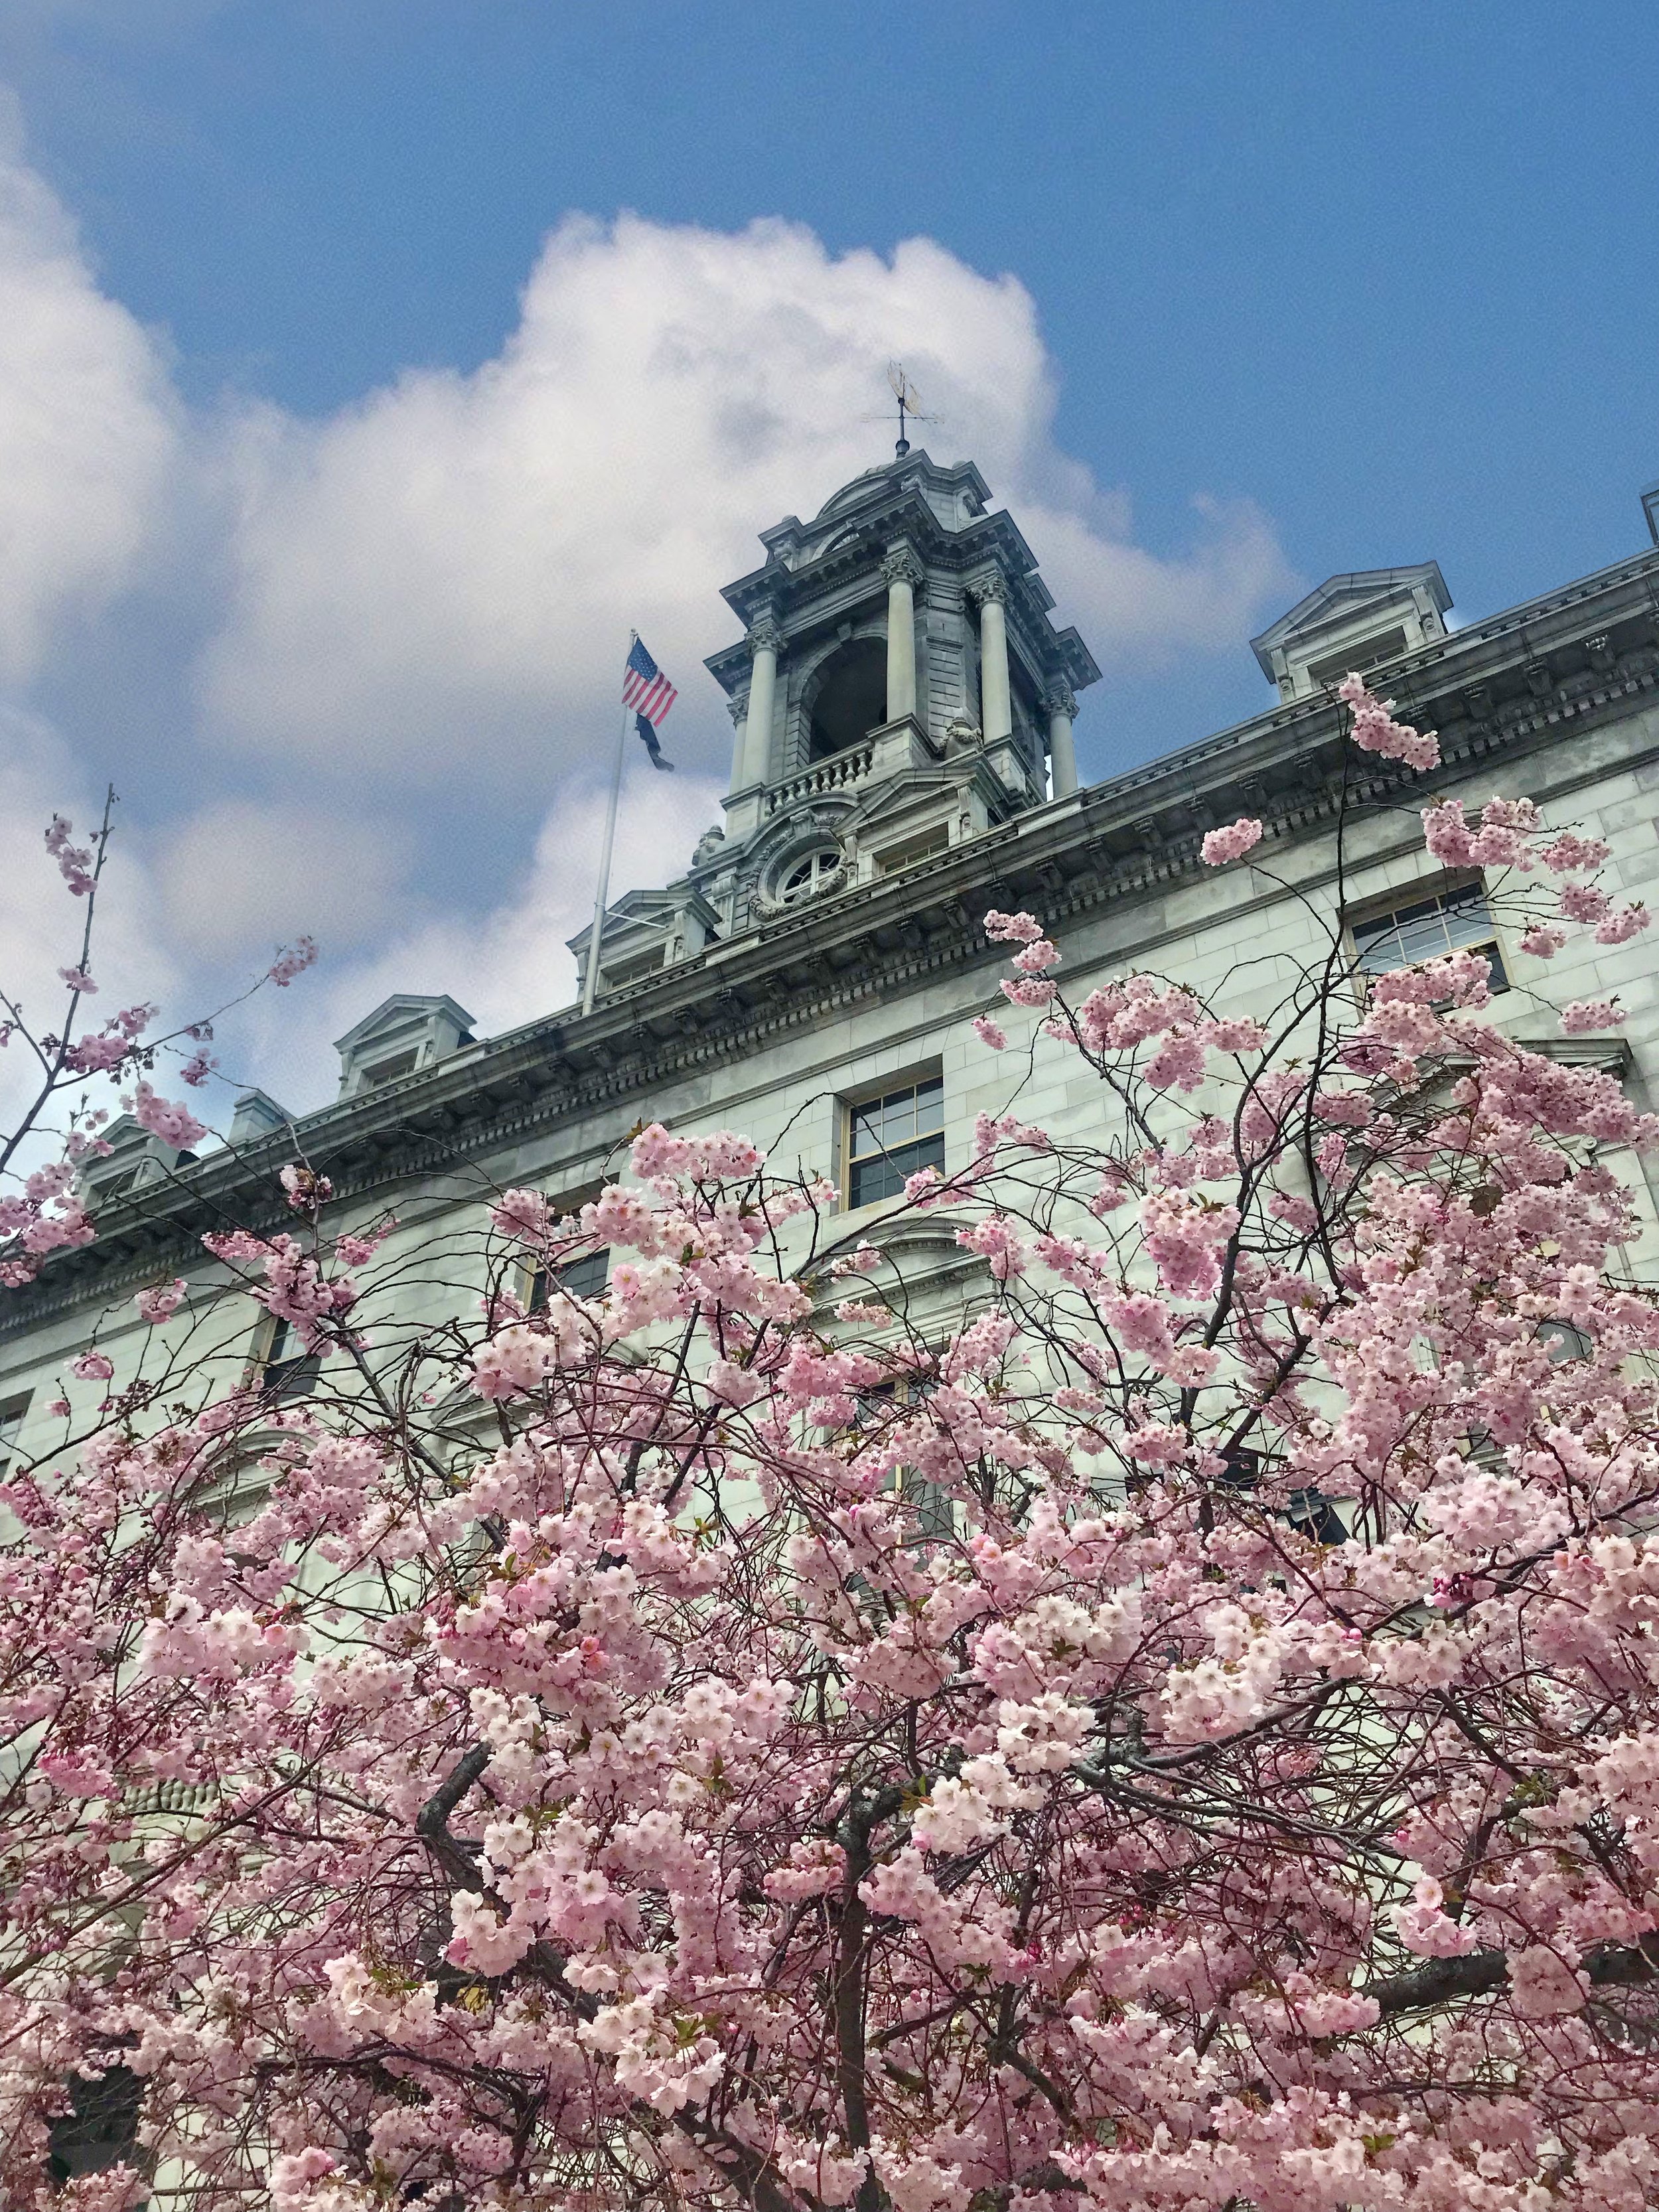  Visit Portland Maine City Hall 